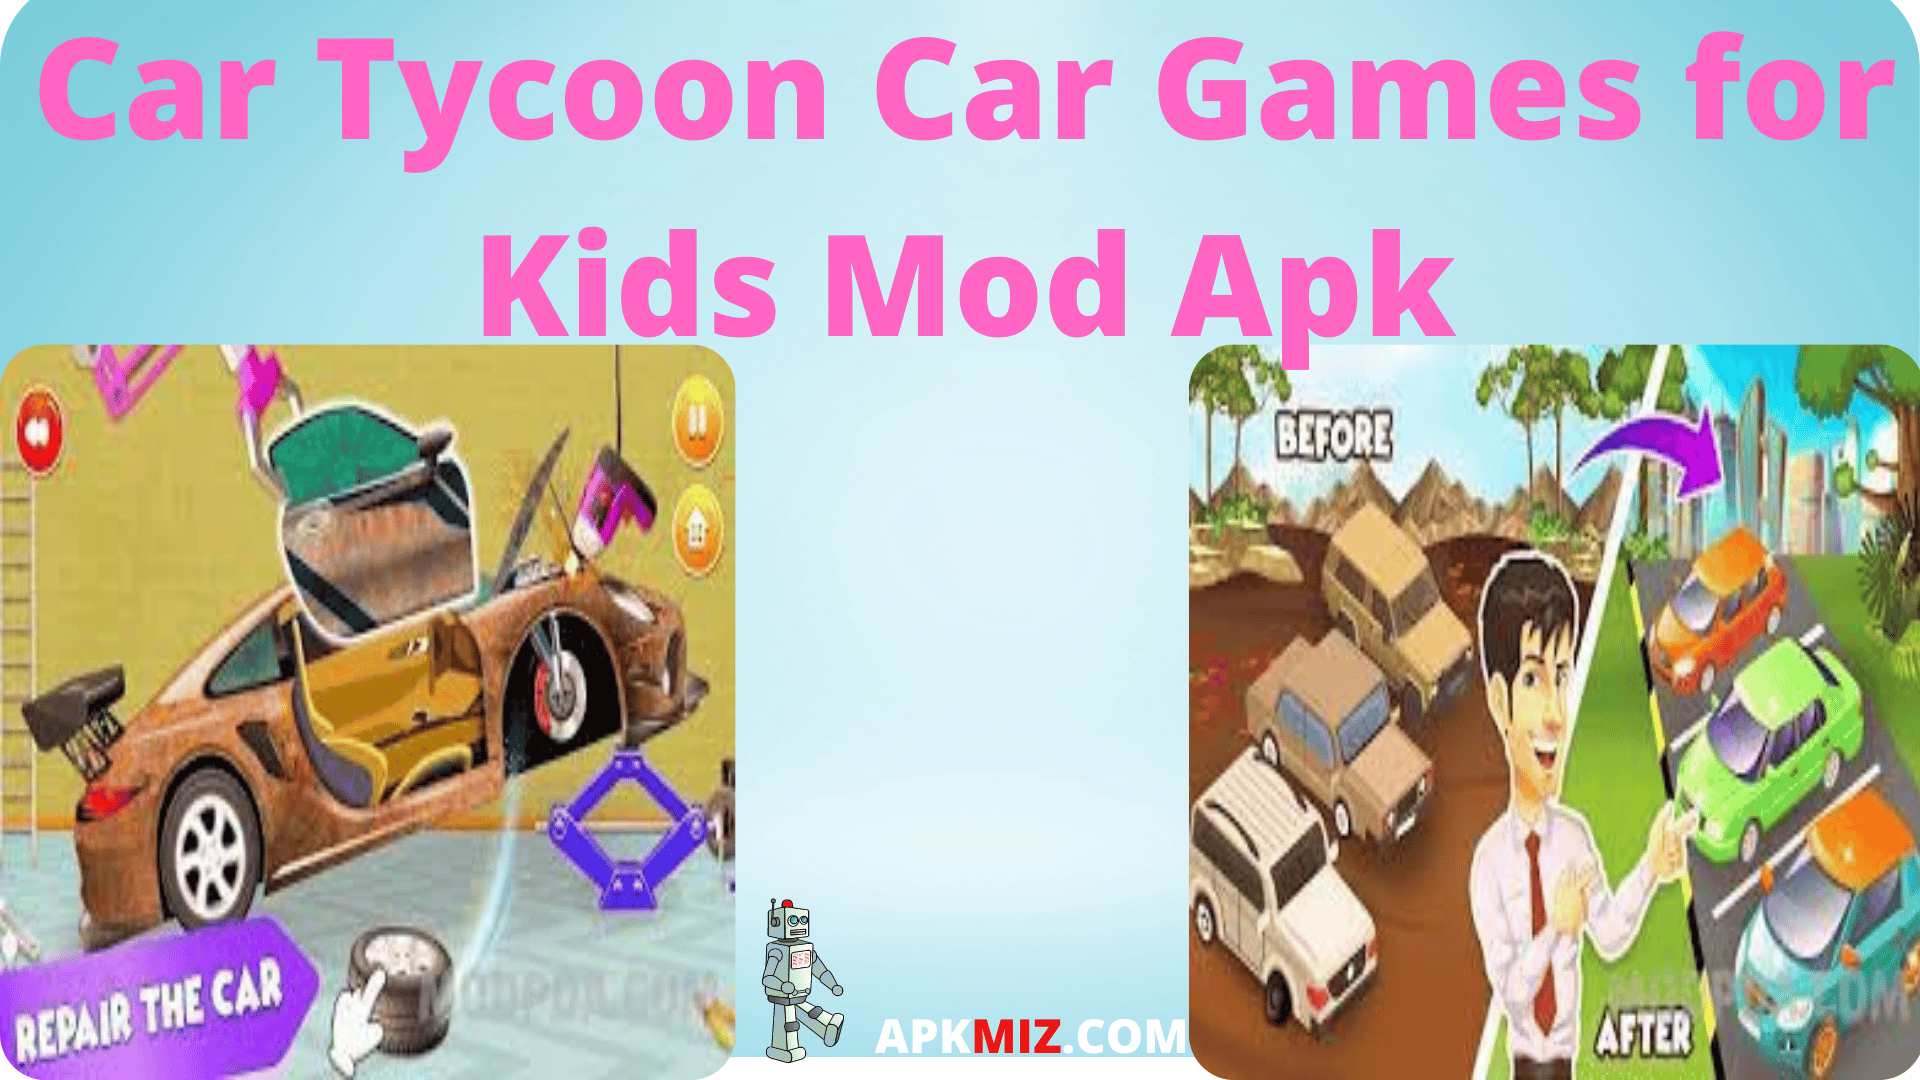 Car Tycoon Car Games for Kids Mod Apk